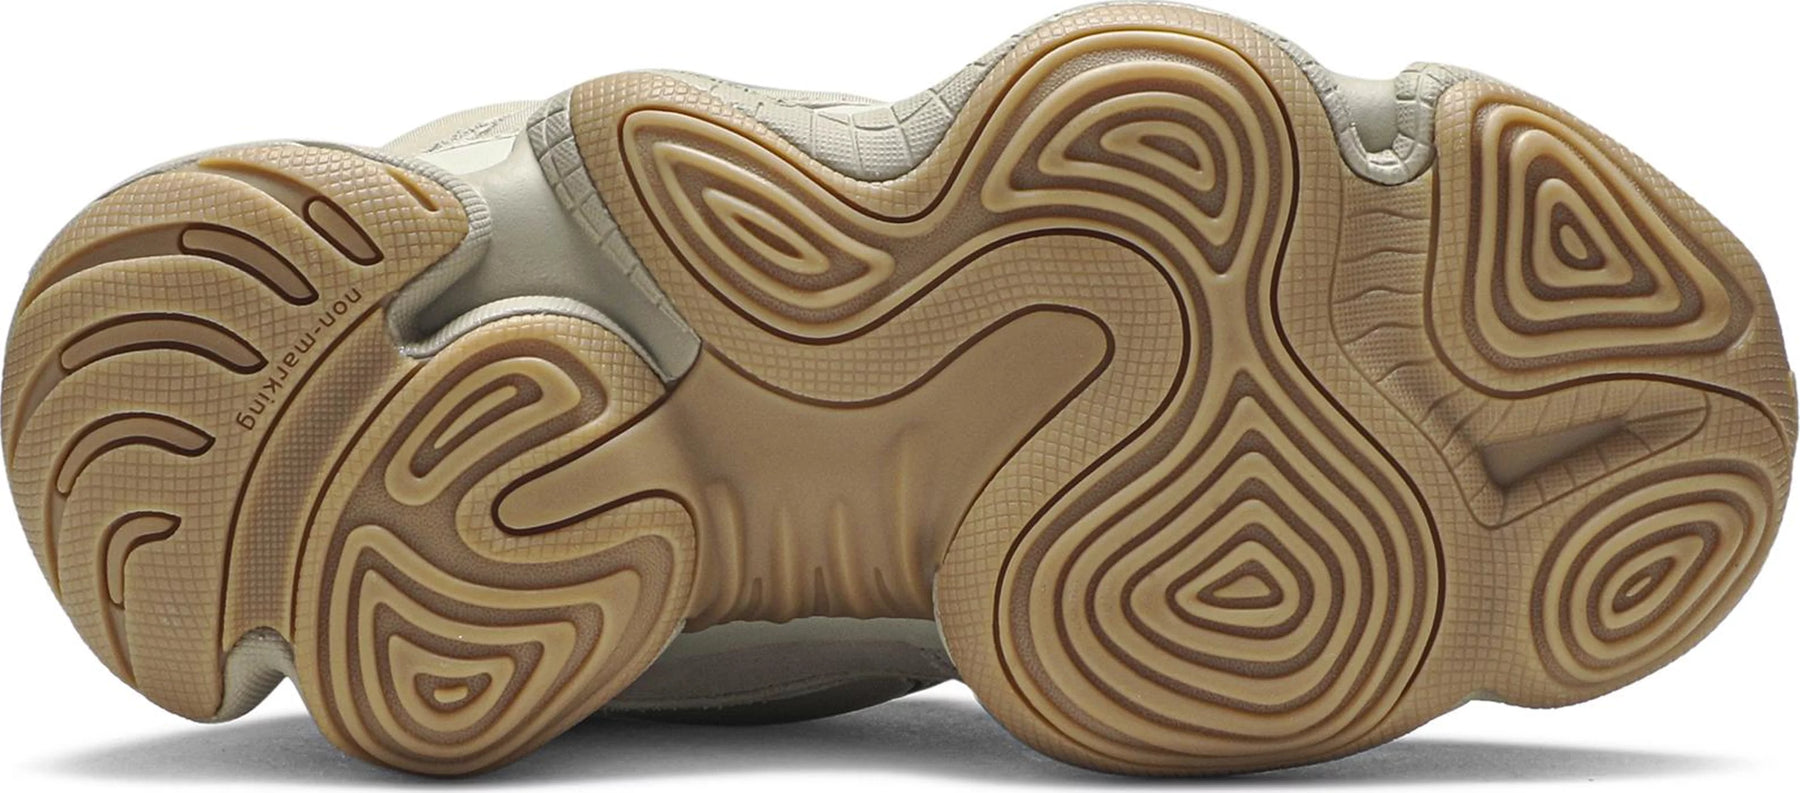 Adidas Yeezy 500 "Stone"